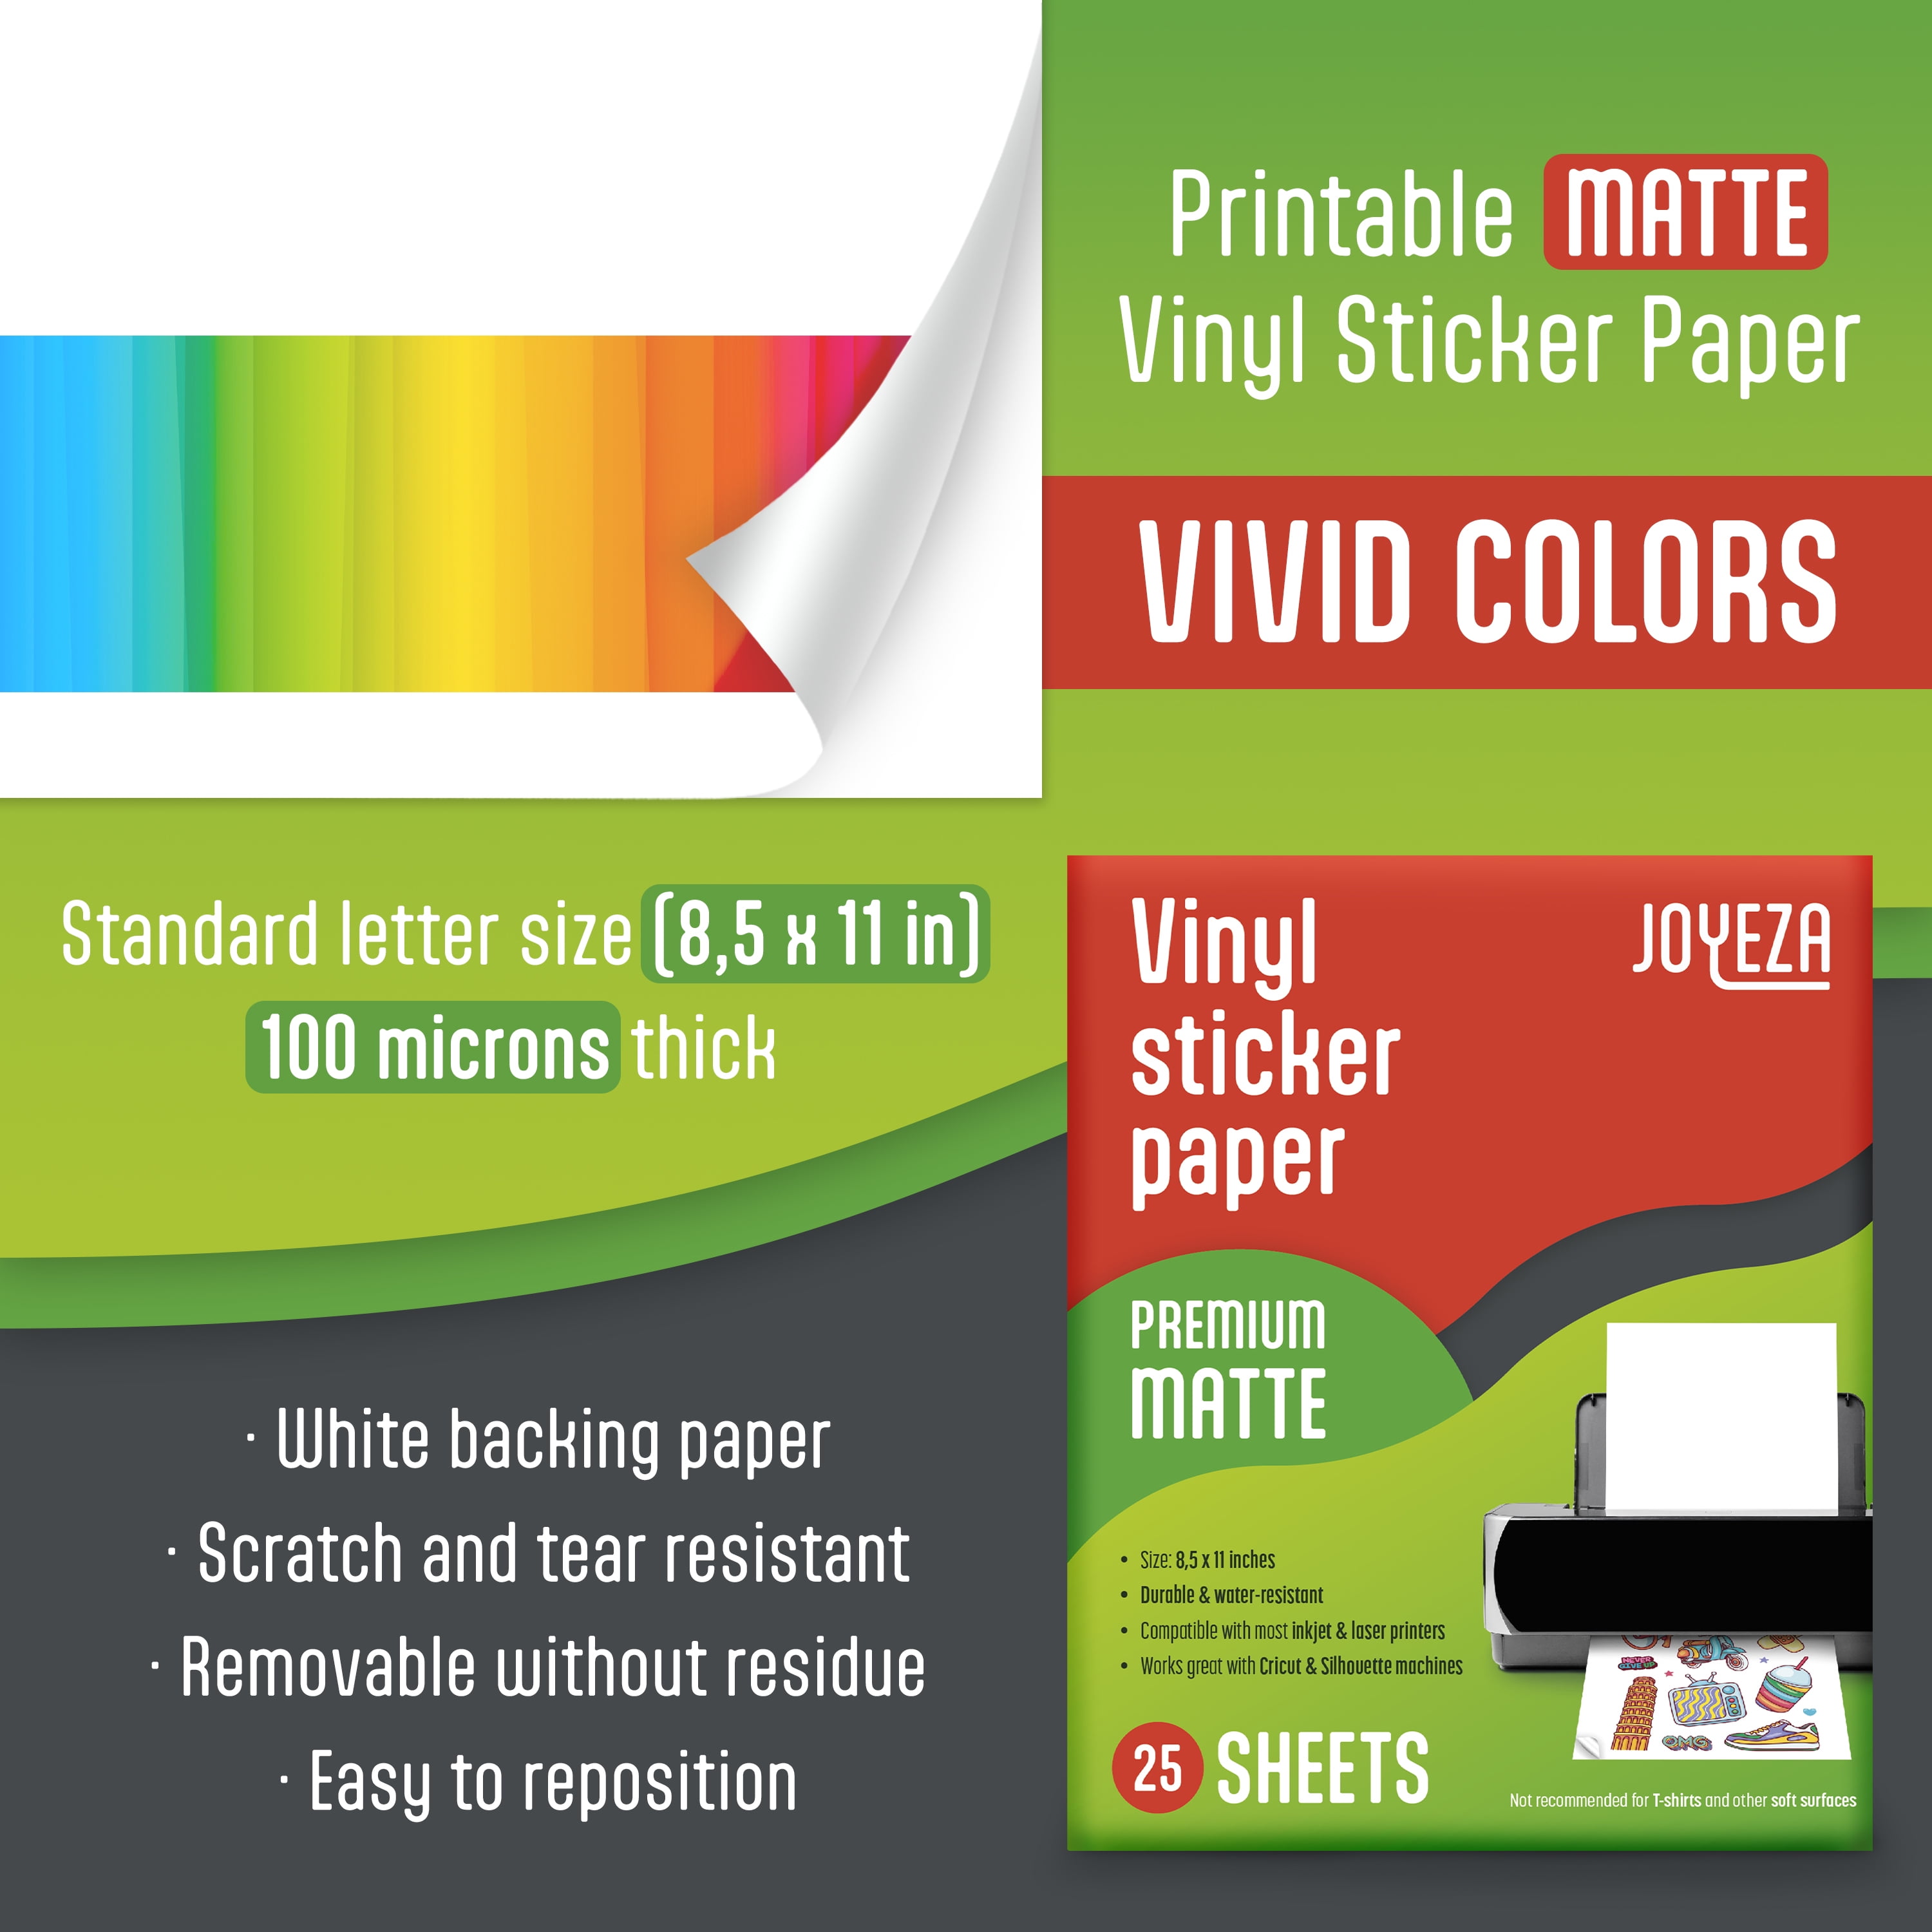 Limia's Care Printable Vinyl Sticker Paper for Qatar